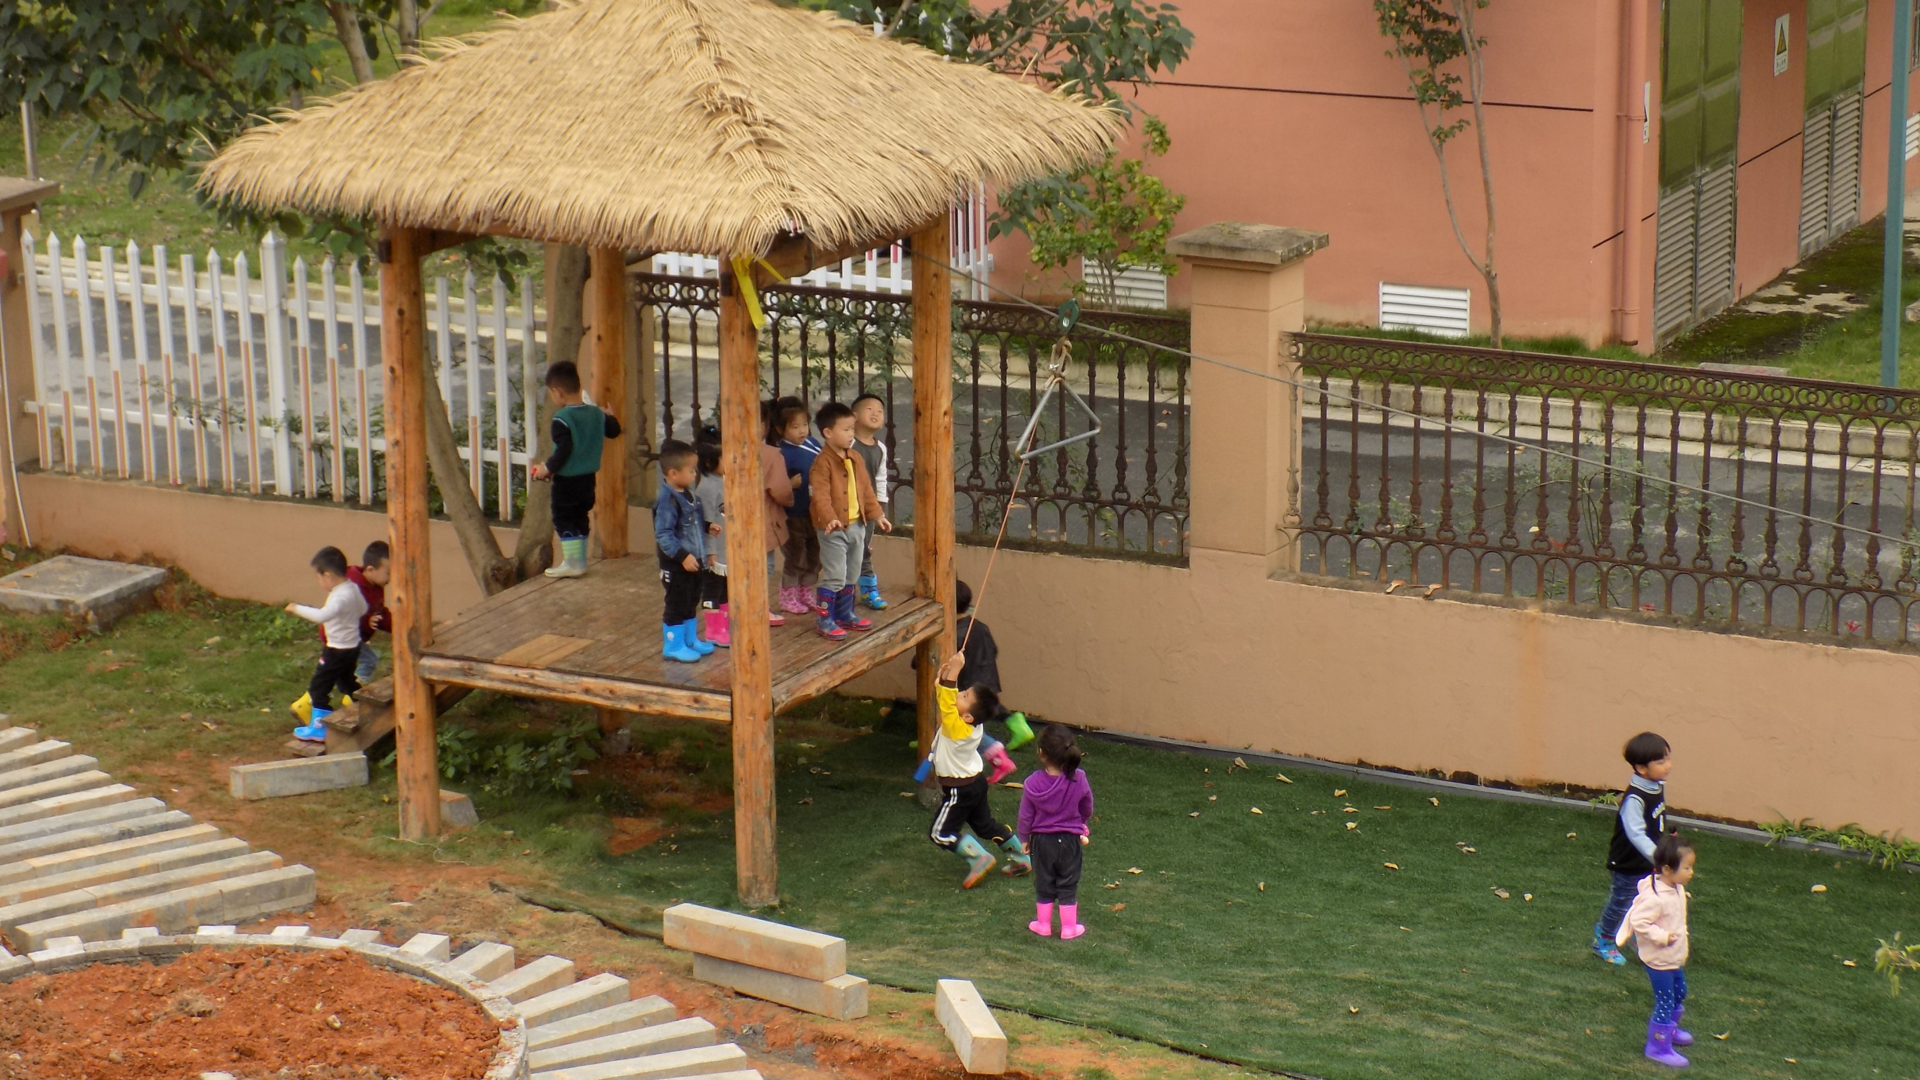 Children playing on the playground